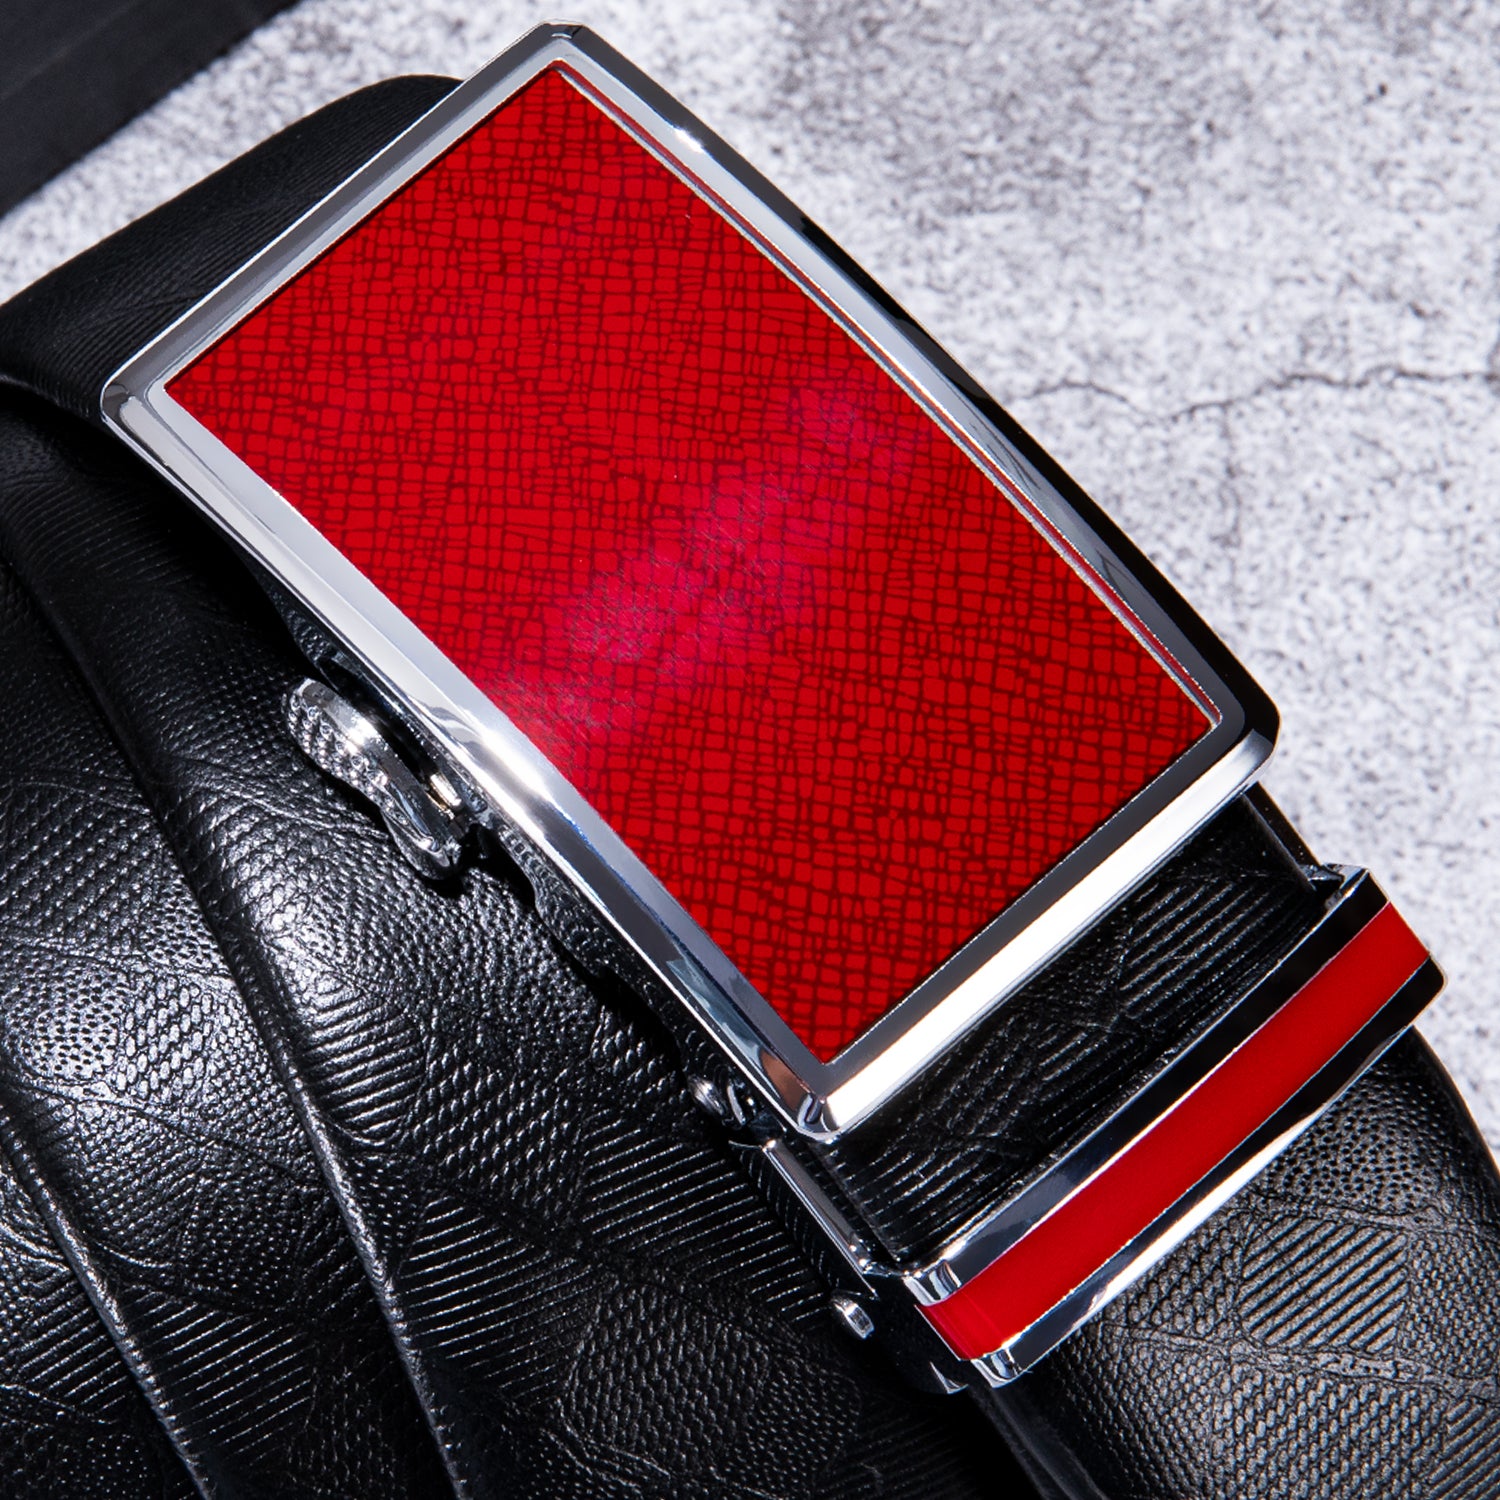 Luxury Red Plaid Metal Buckle Genuine Leather Belt 110cm-160cm